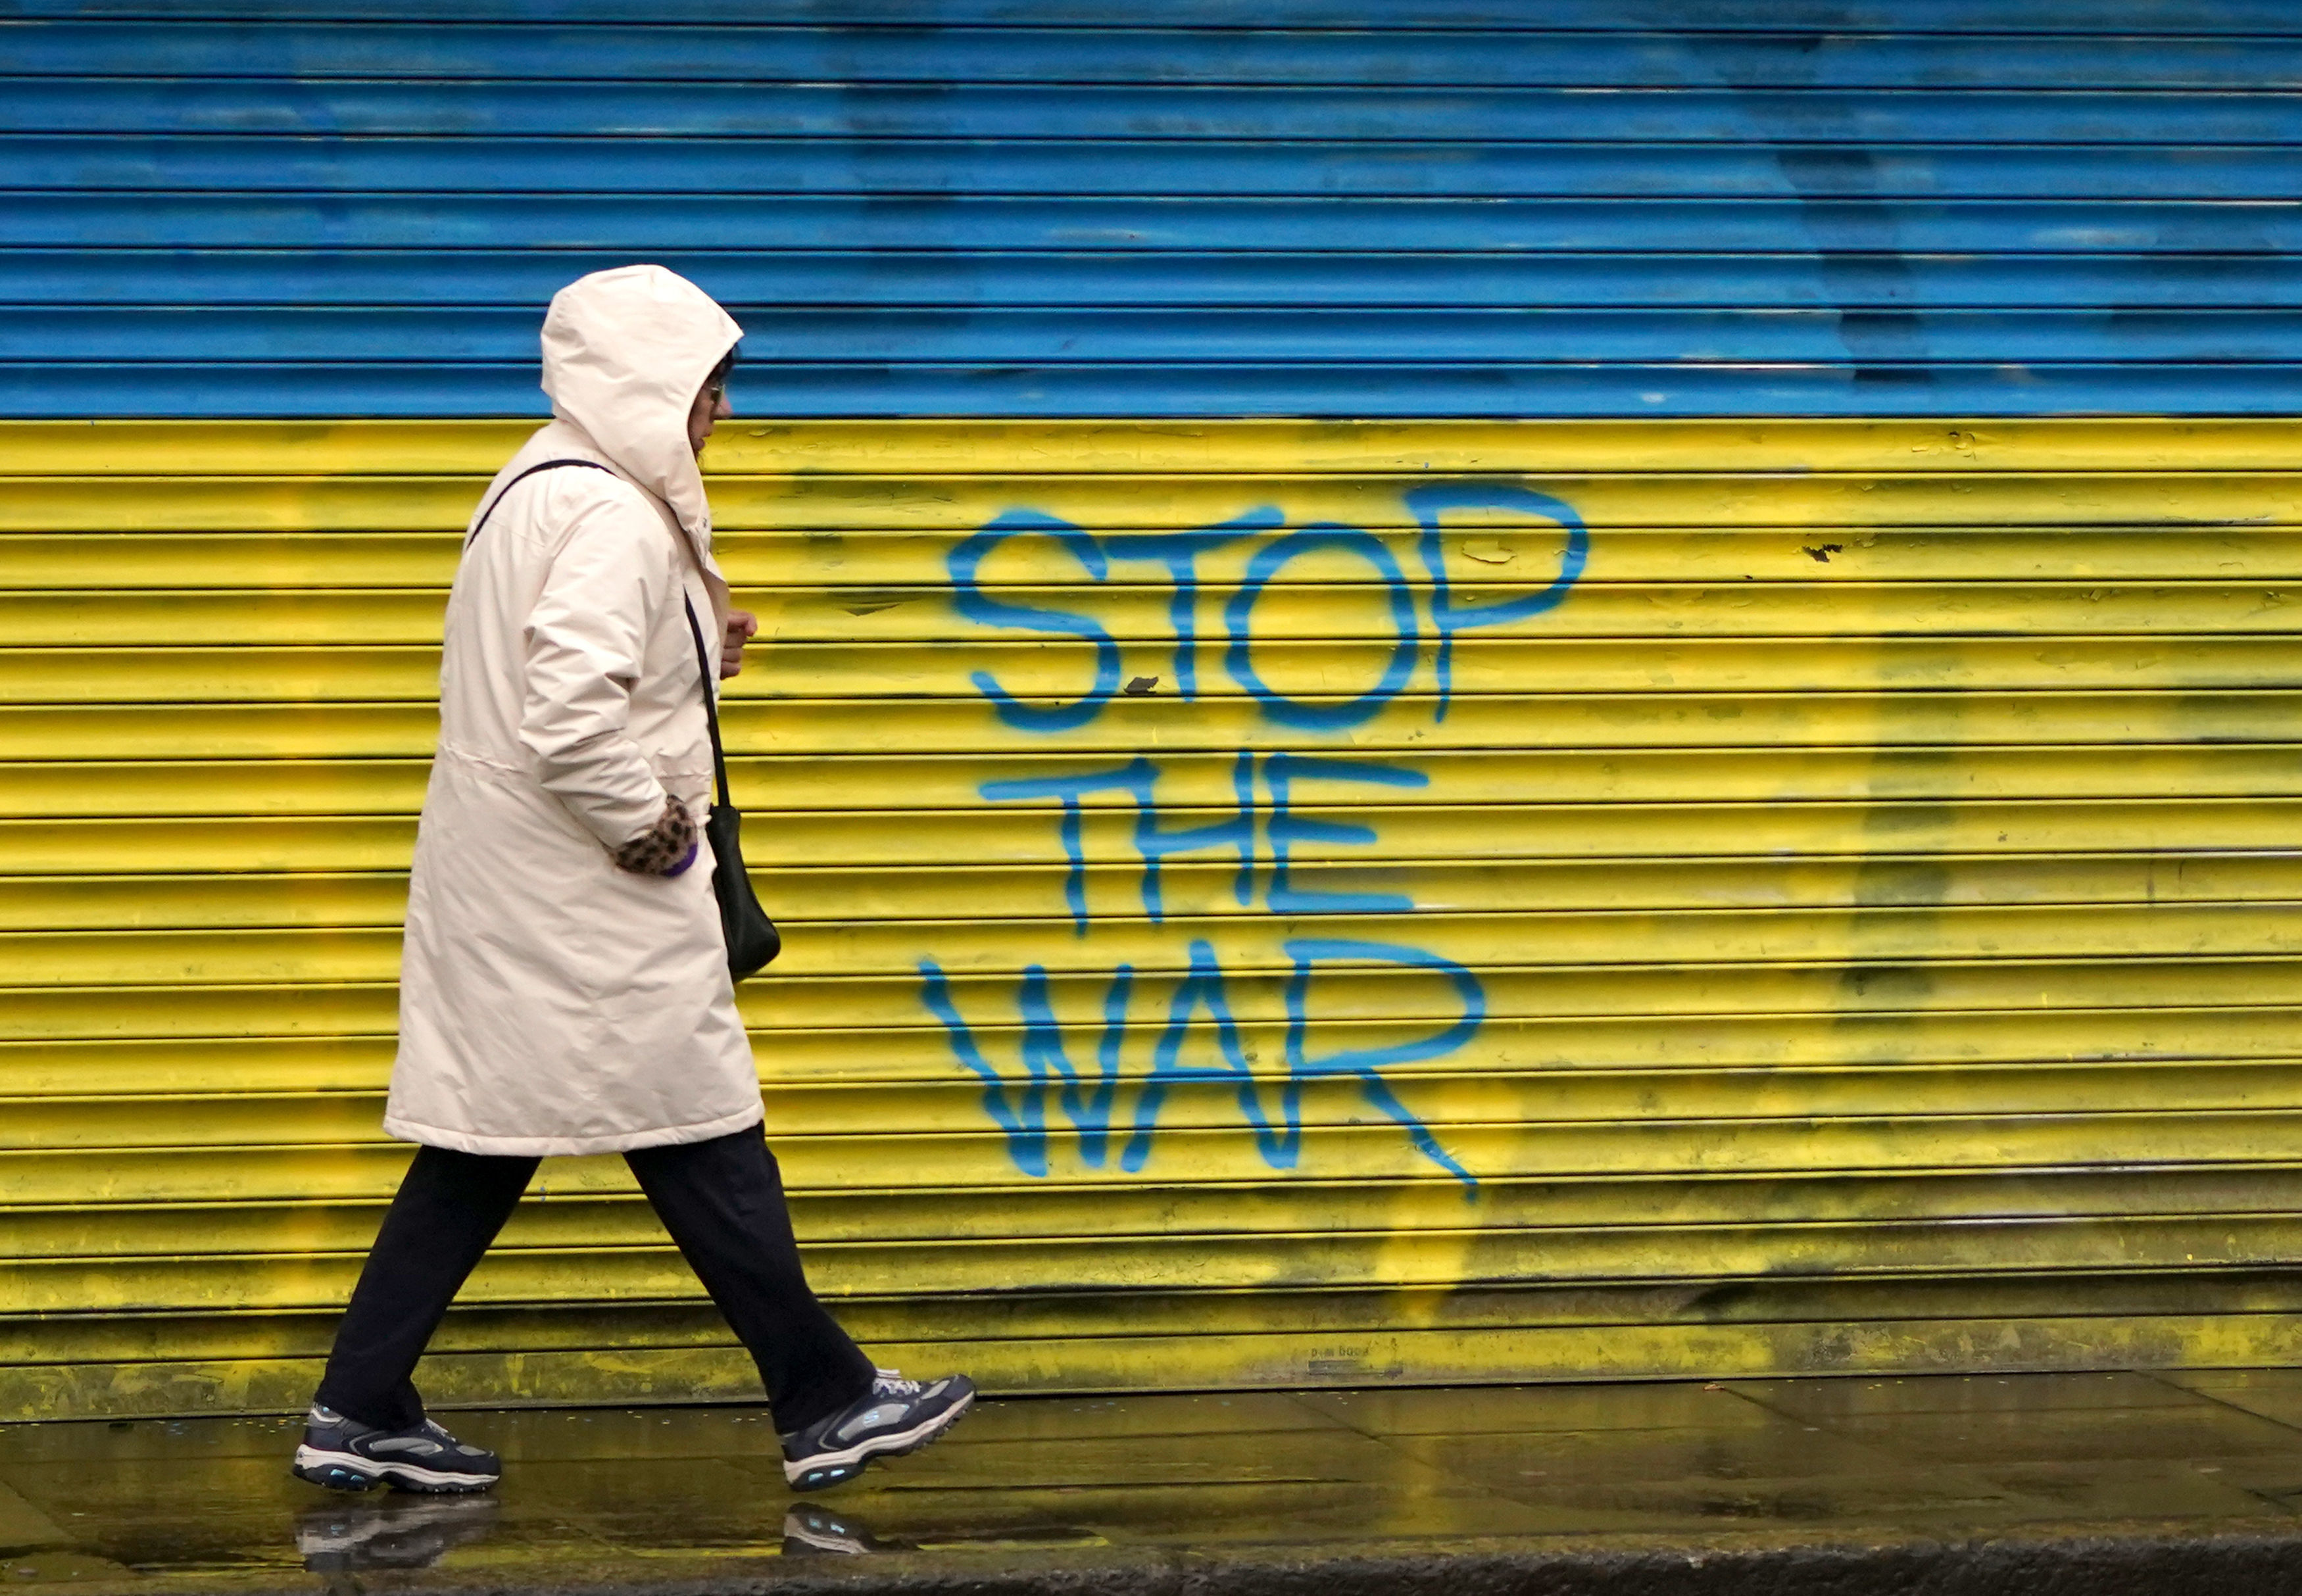 Ukraine-Russia war graffiti